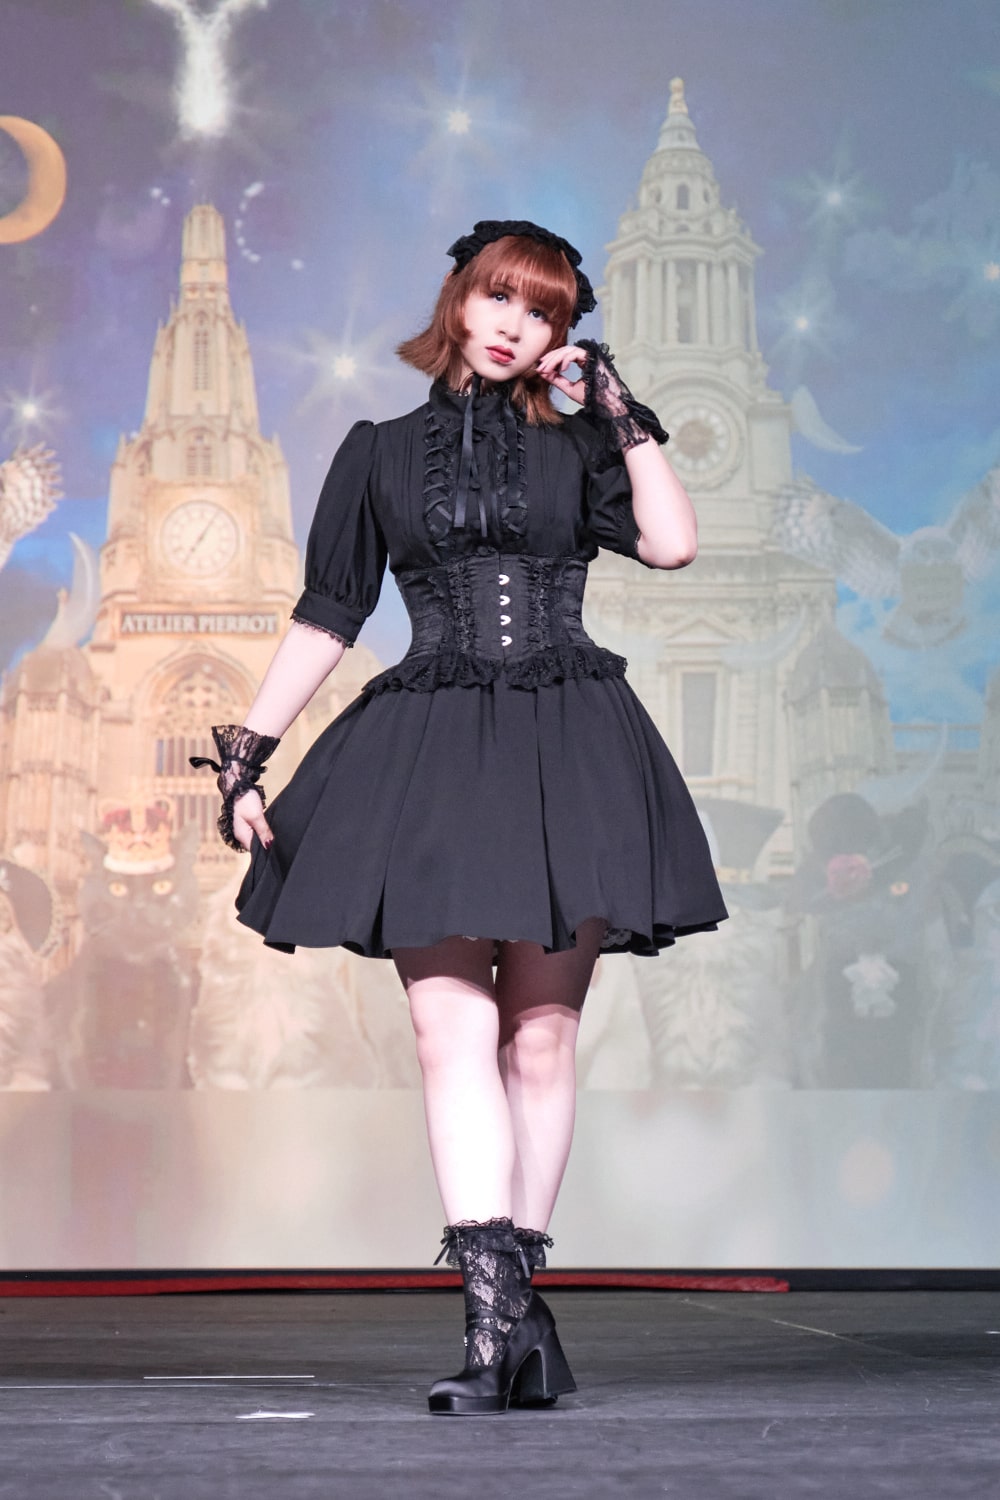 Atelier Pierrot gothic lolita model wearing all black short sleeved dress with black corset - full body standing pose 1.